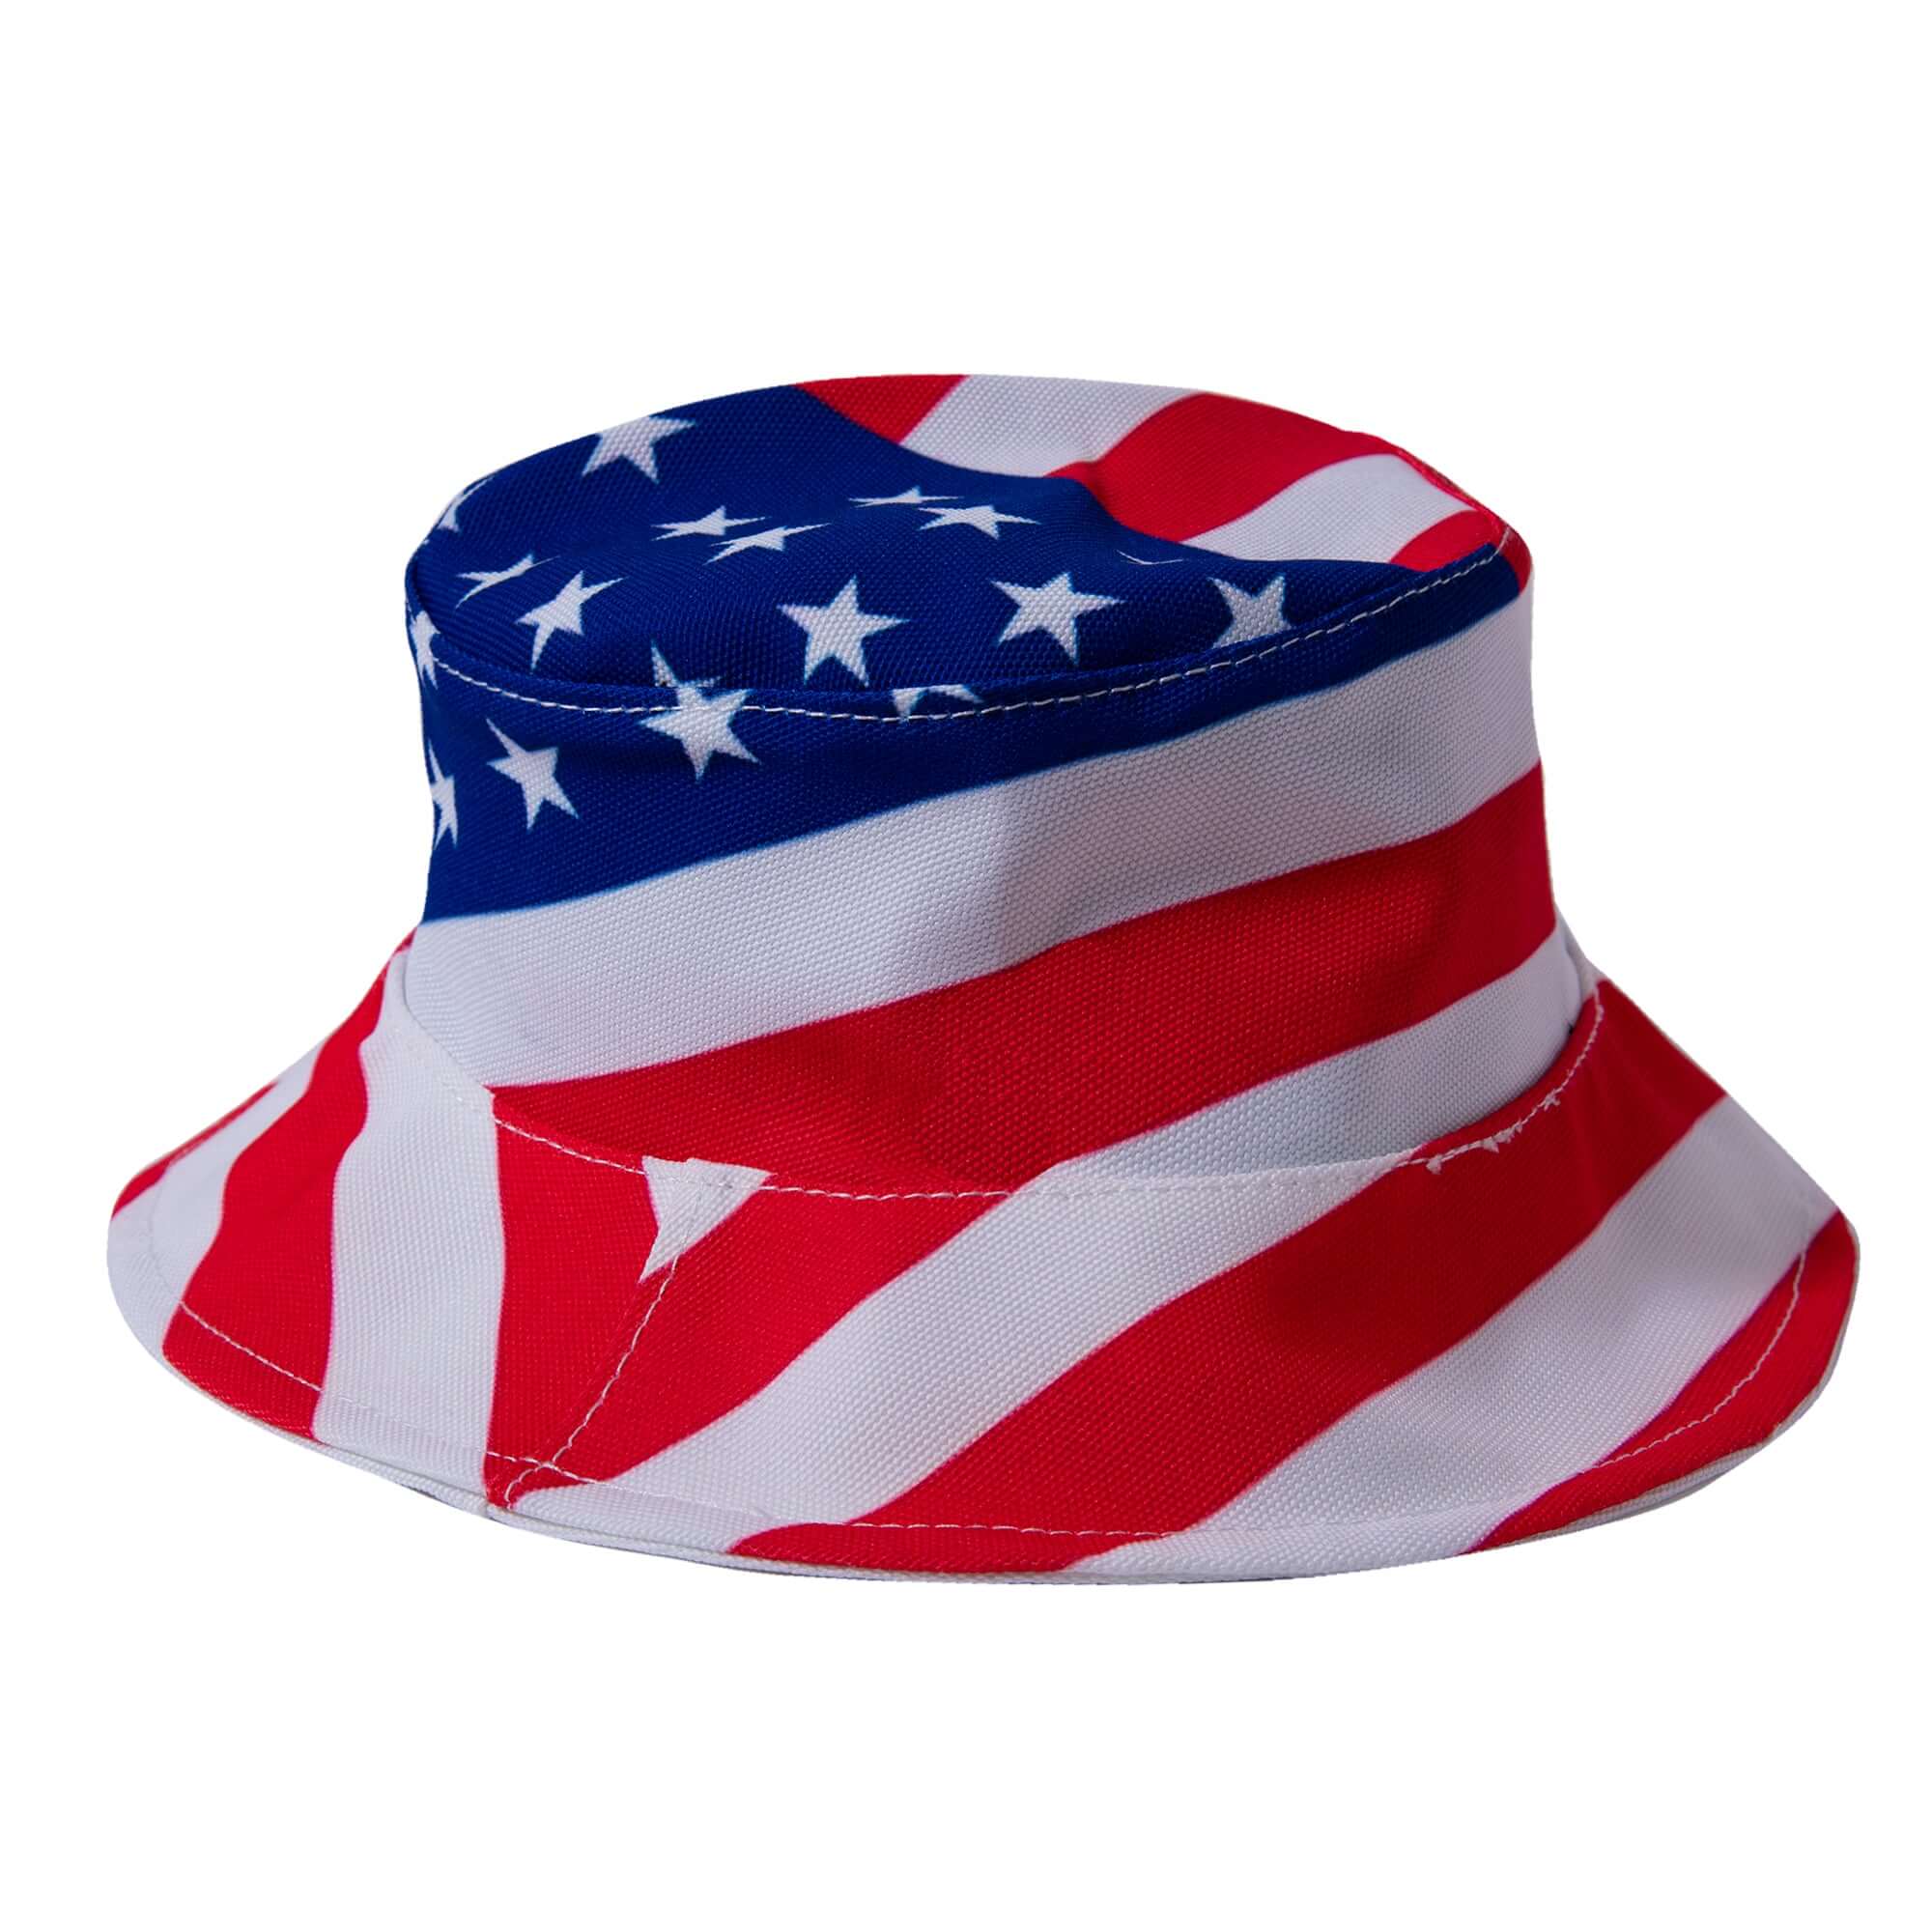 USA Flag Distressed Denim Bucket Hat - Red Elephant Brand